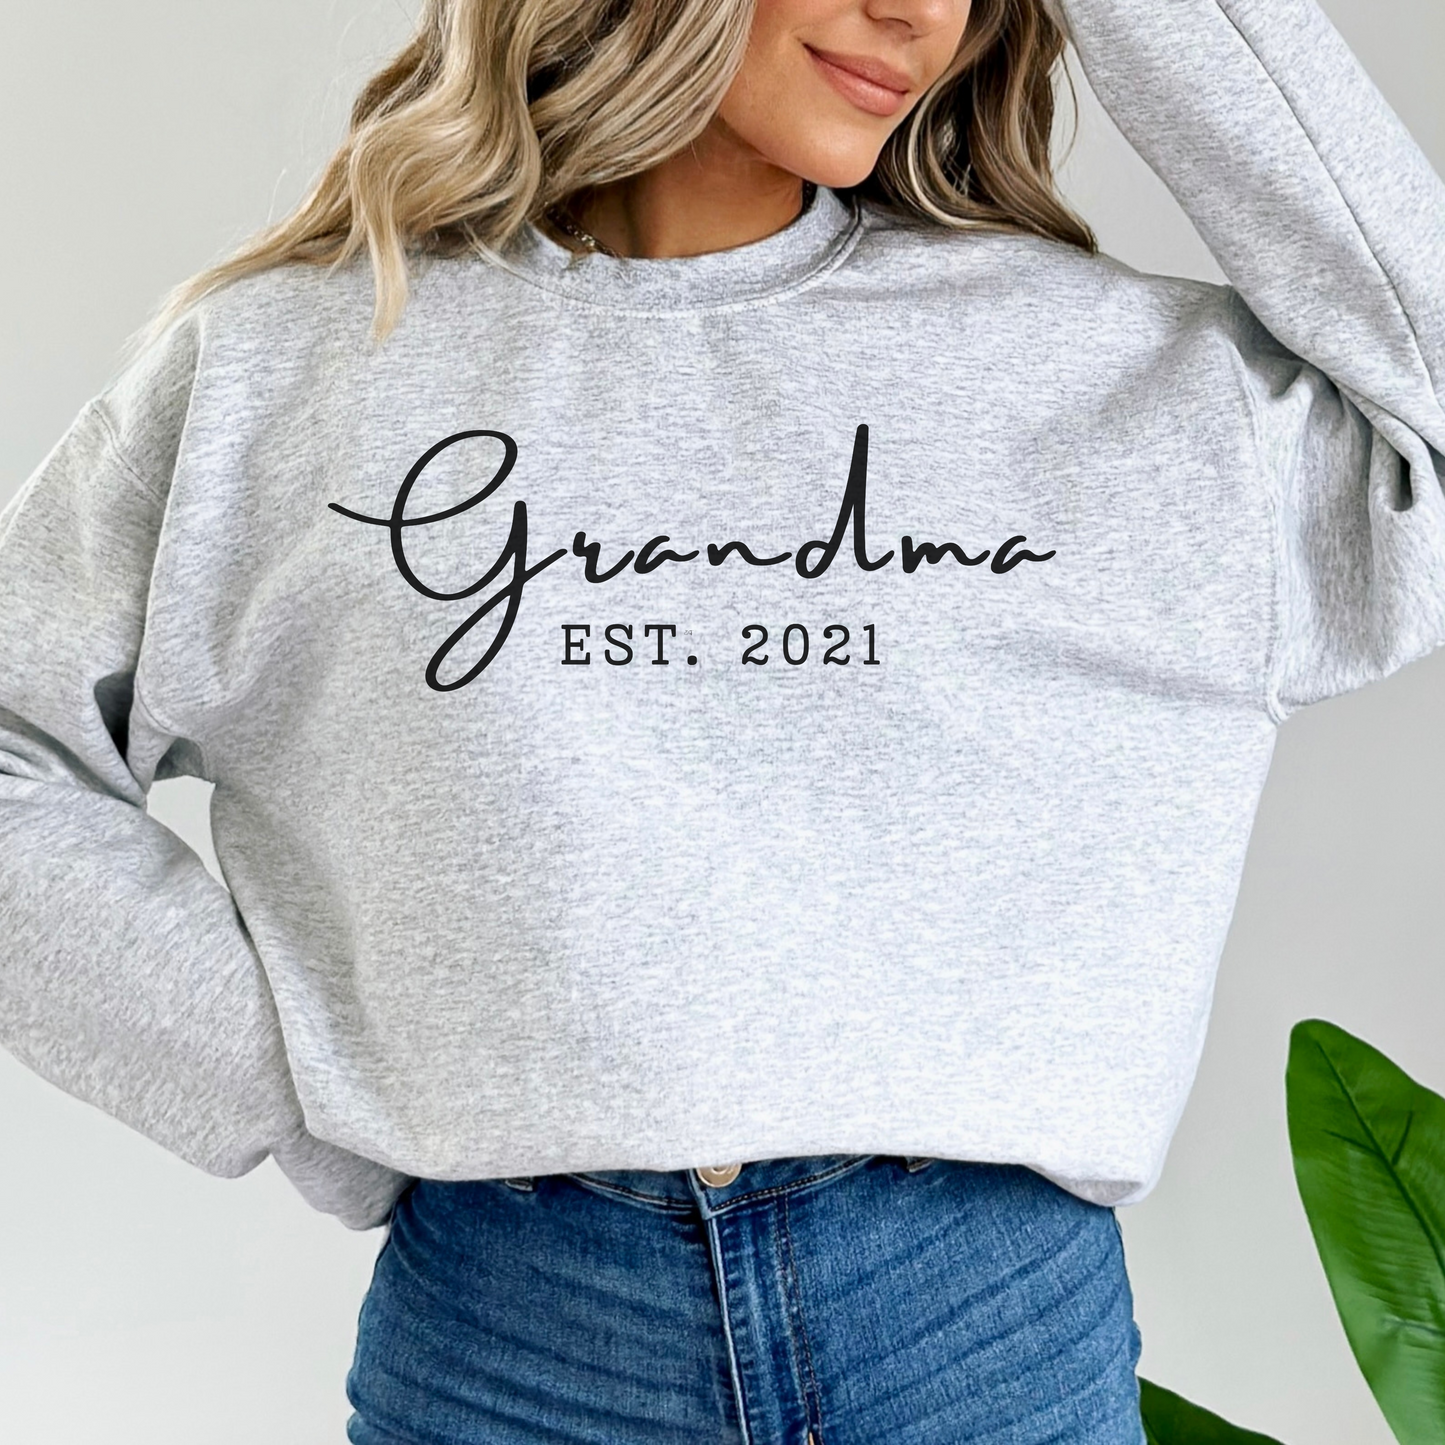 GRANDMA EST Sweater